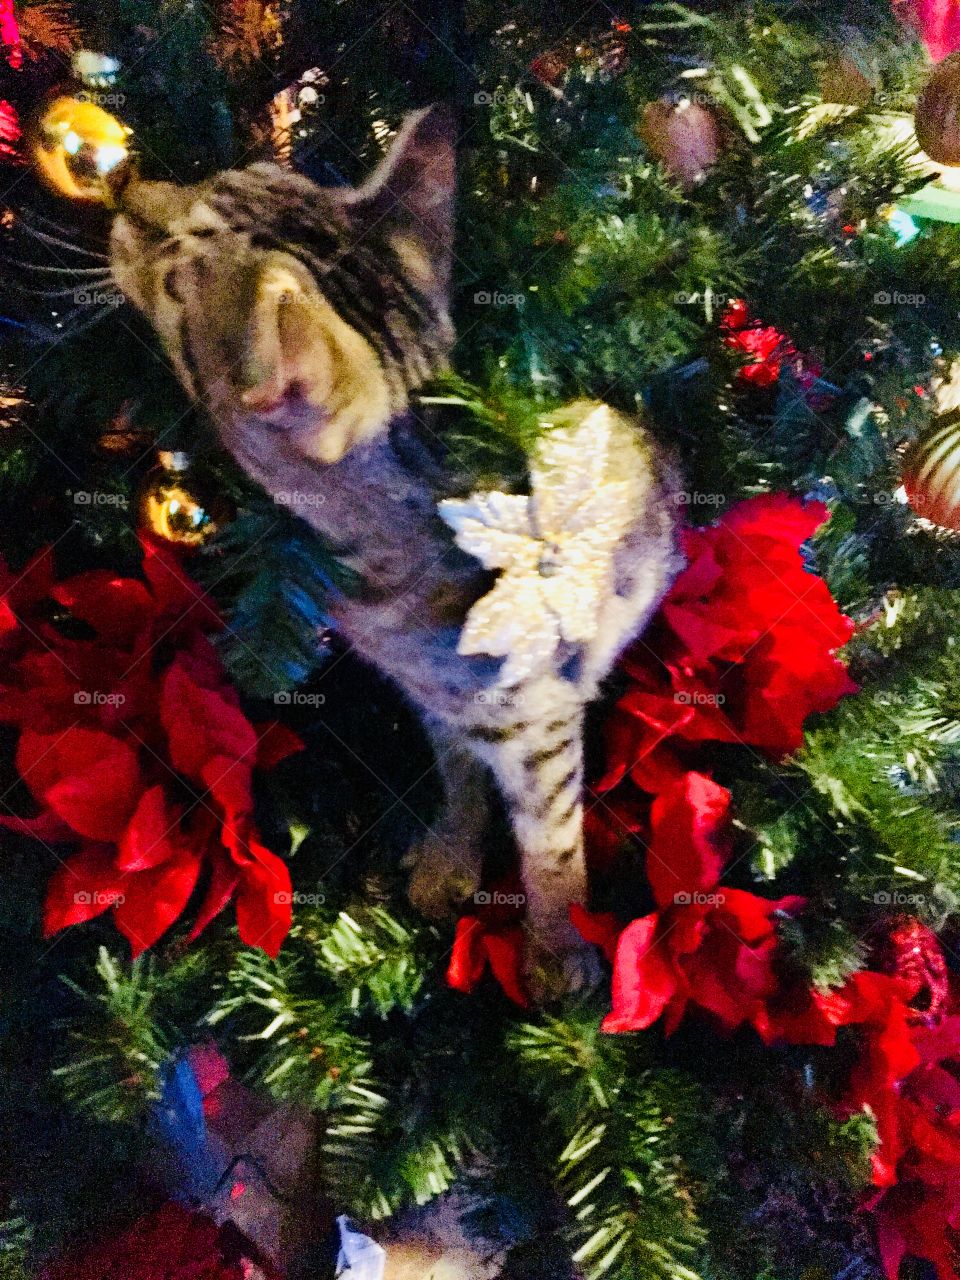 K.C and the Christmas Tree